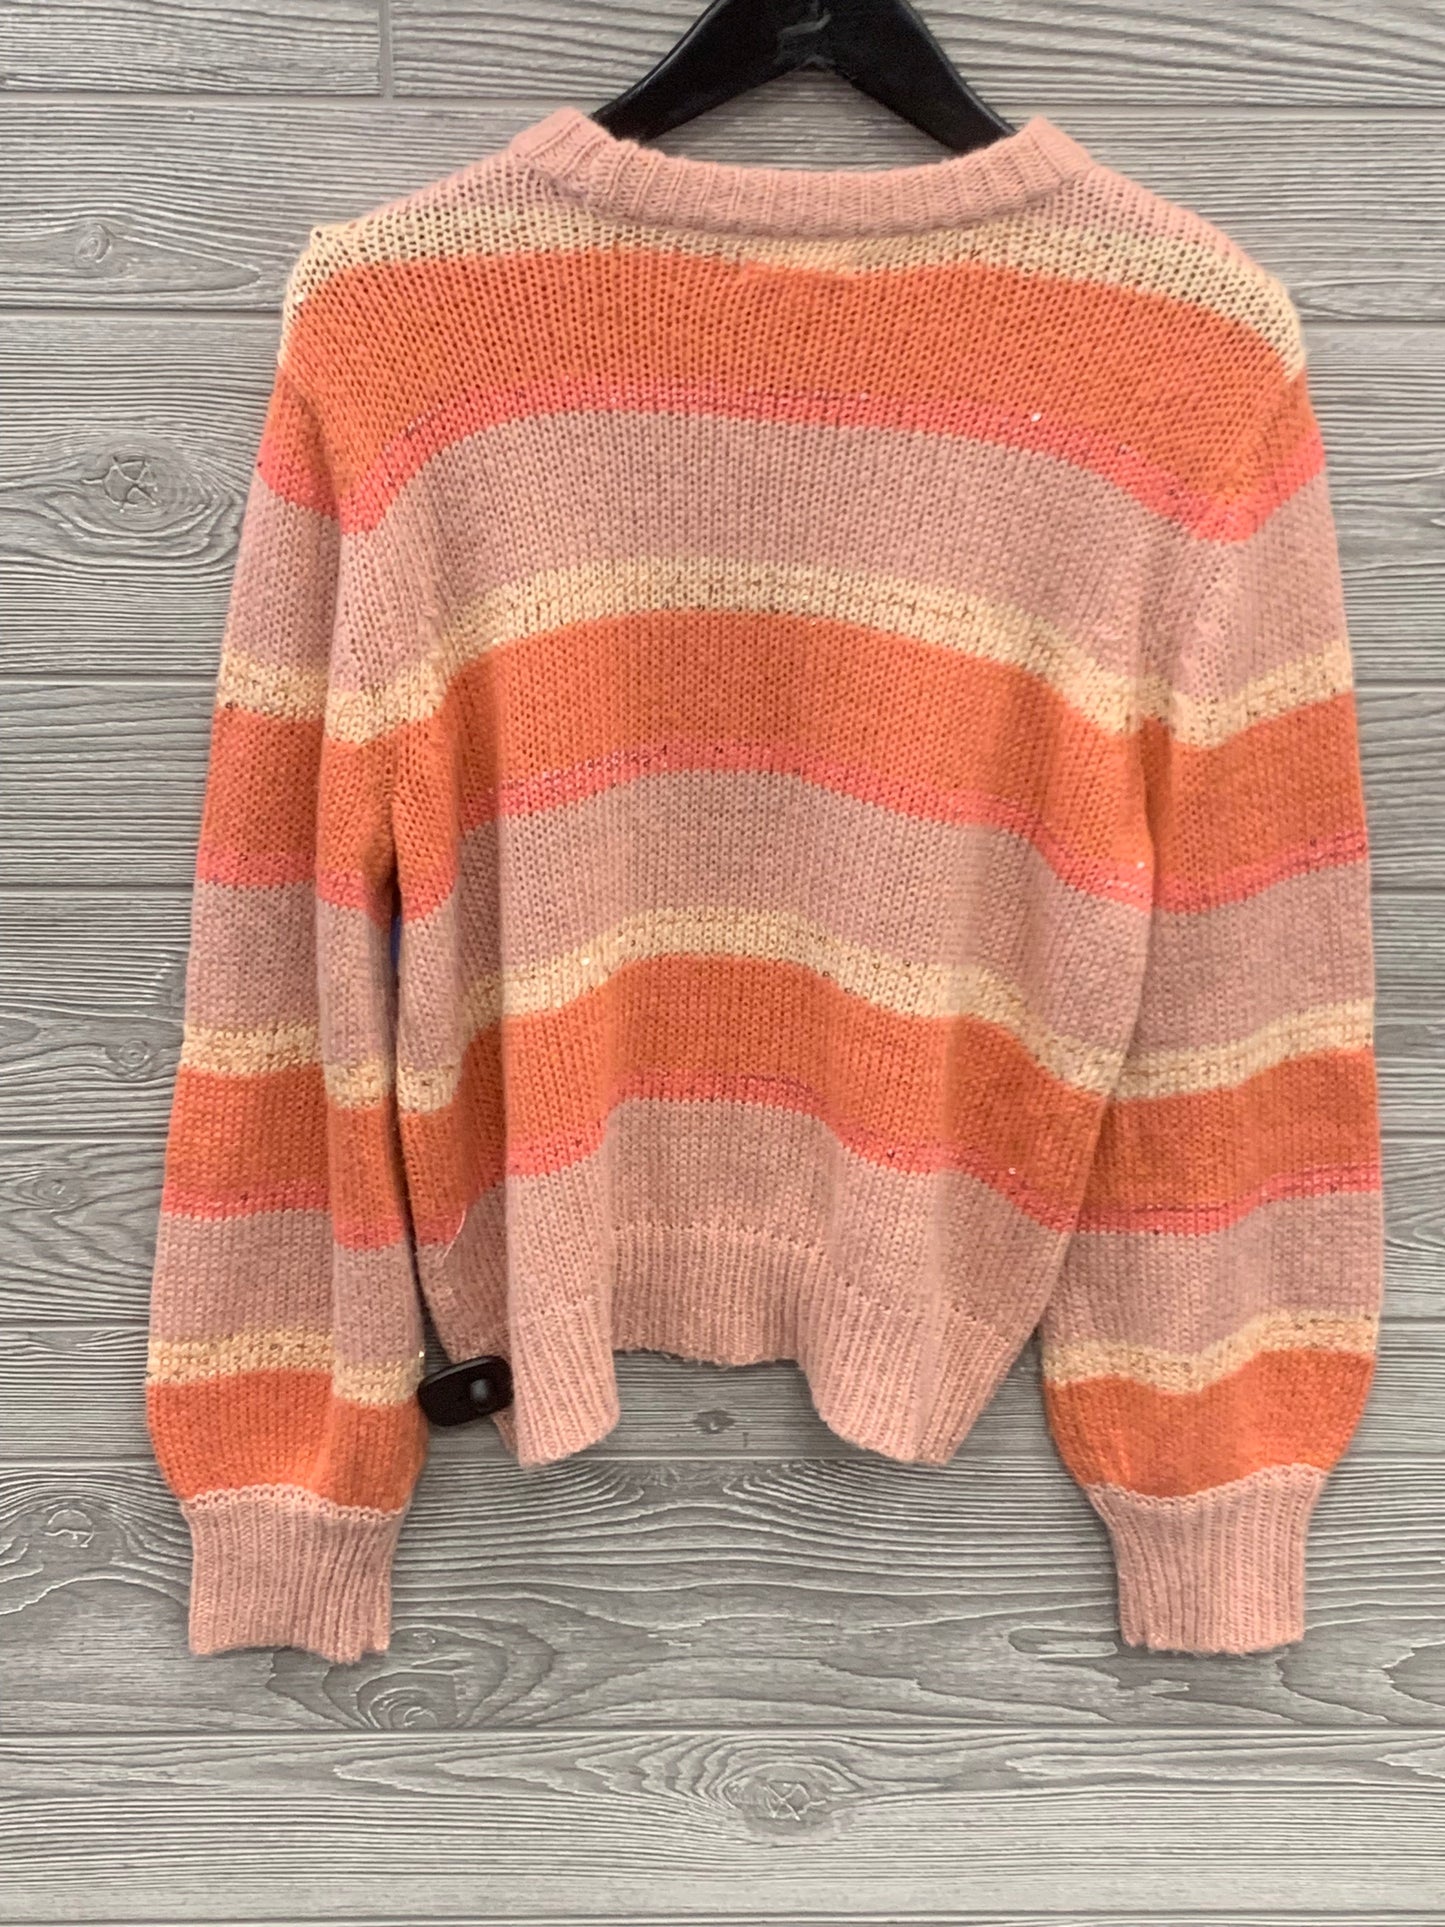 Sweater By Lc Lauren Conrad  Size: L